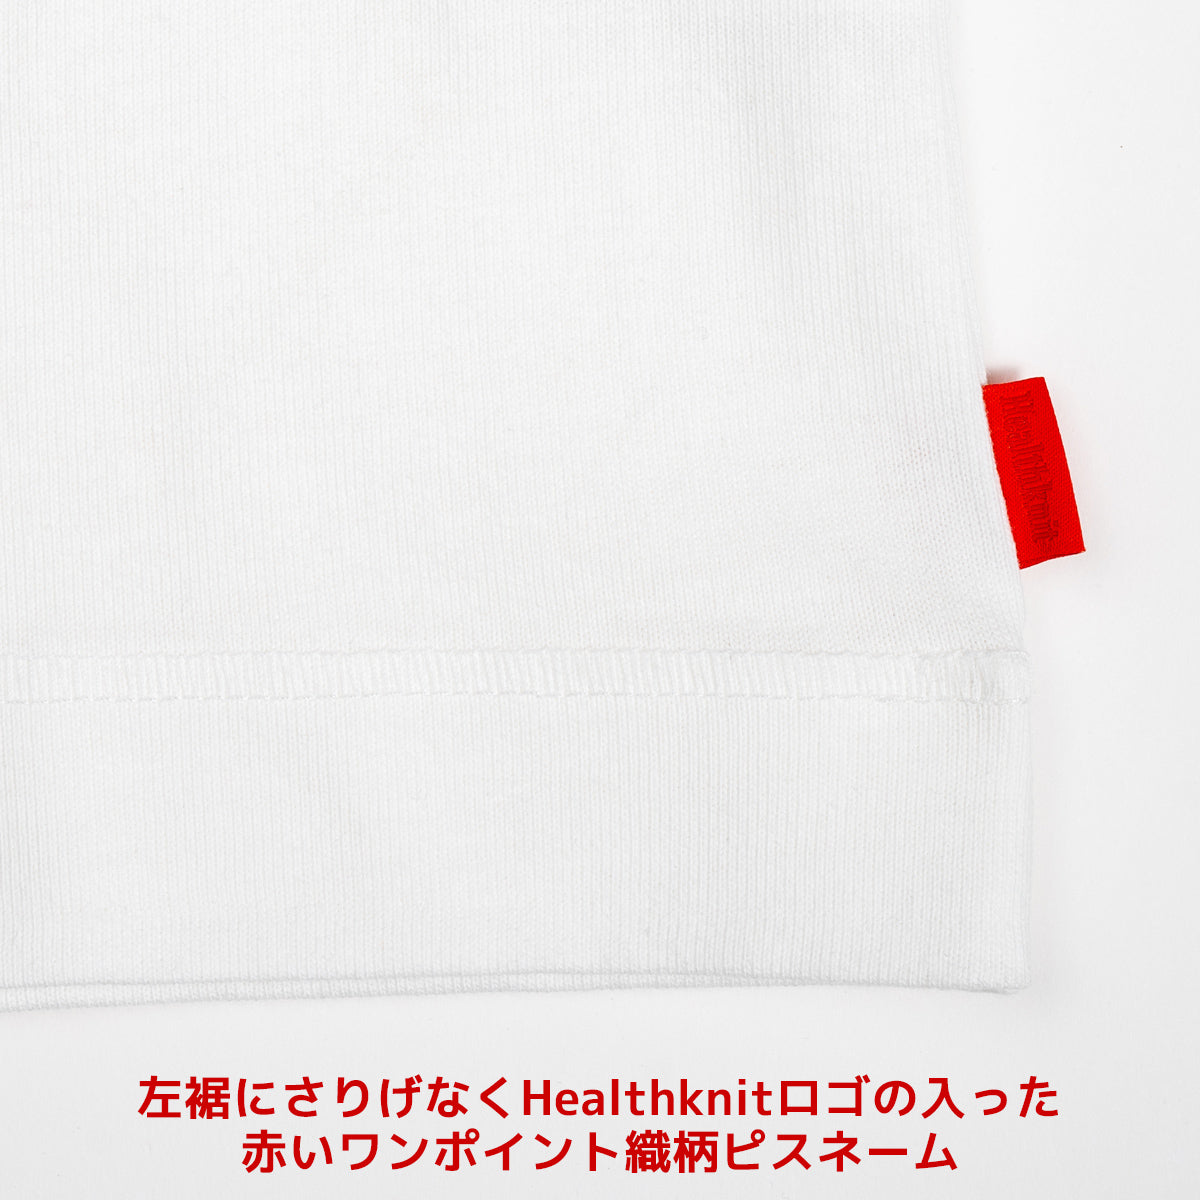 Healthknit ヘルスニット ヘンリーネックTシャツ Healthknit マックスウェイト 51020